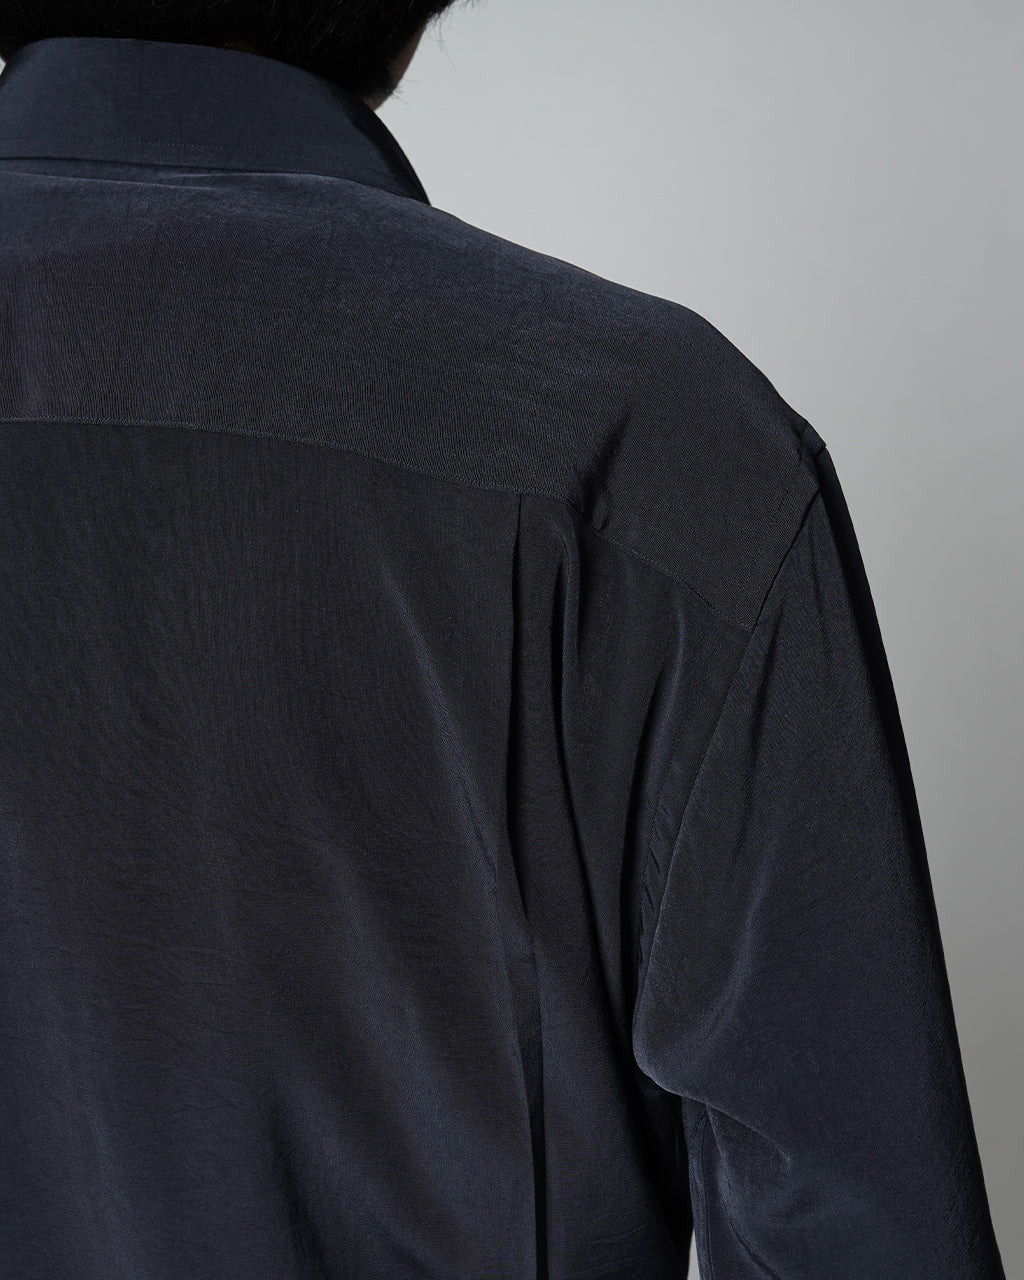 RAINMAKER レインメーカー ドウギシャツ DOUGI SHIRT メンズ  RM241-021【送料無料】